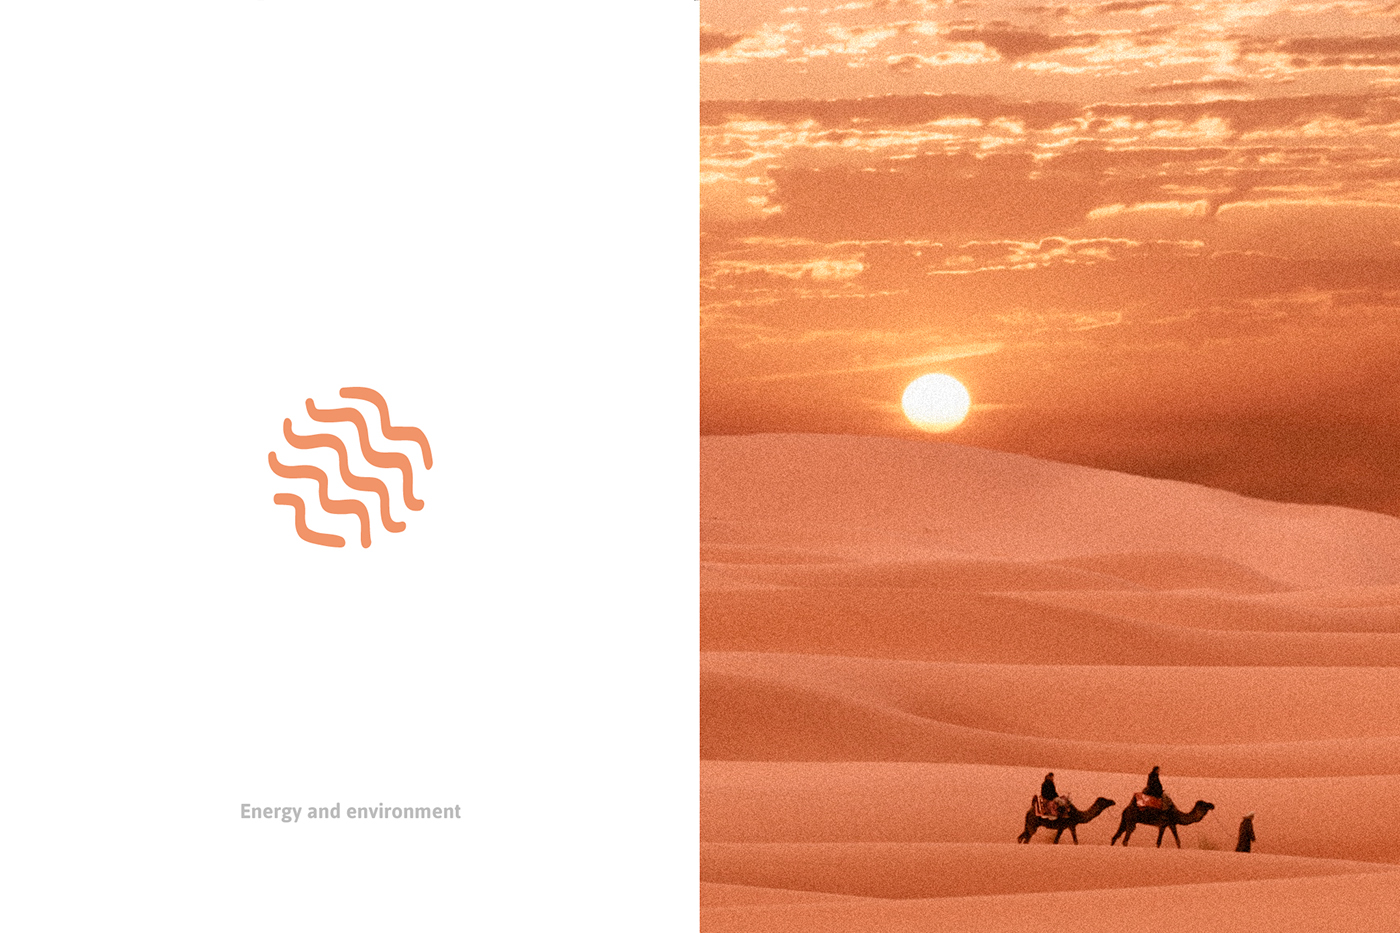 Morocco marruecos country brand logos color shapes sistema ilustracion Desierto mezquita trama pattern contraste pais